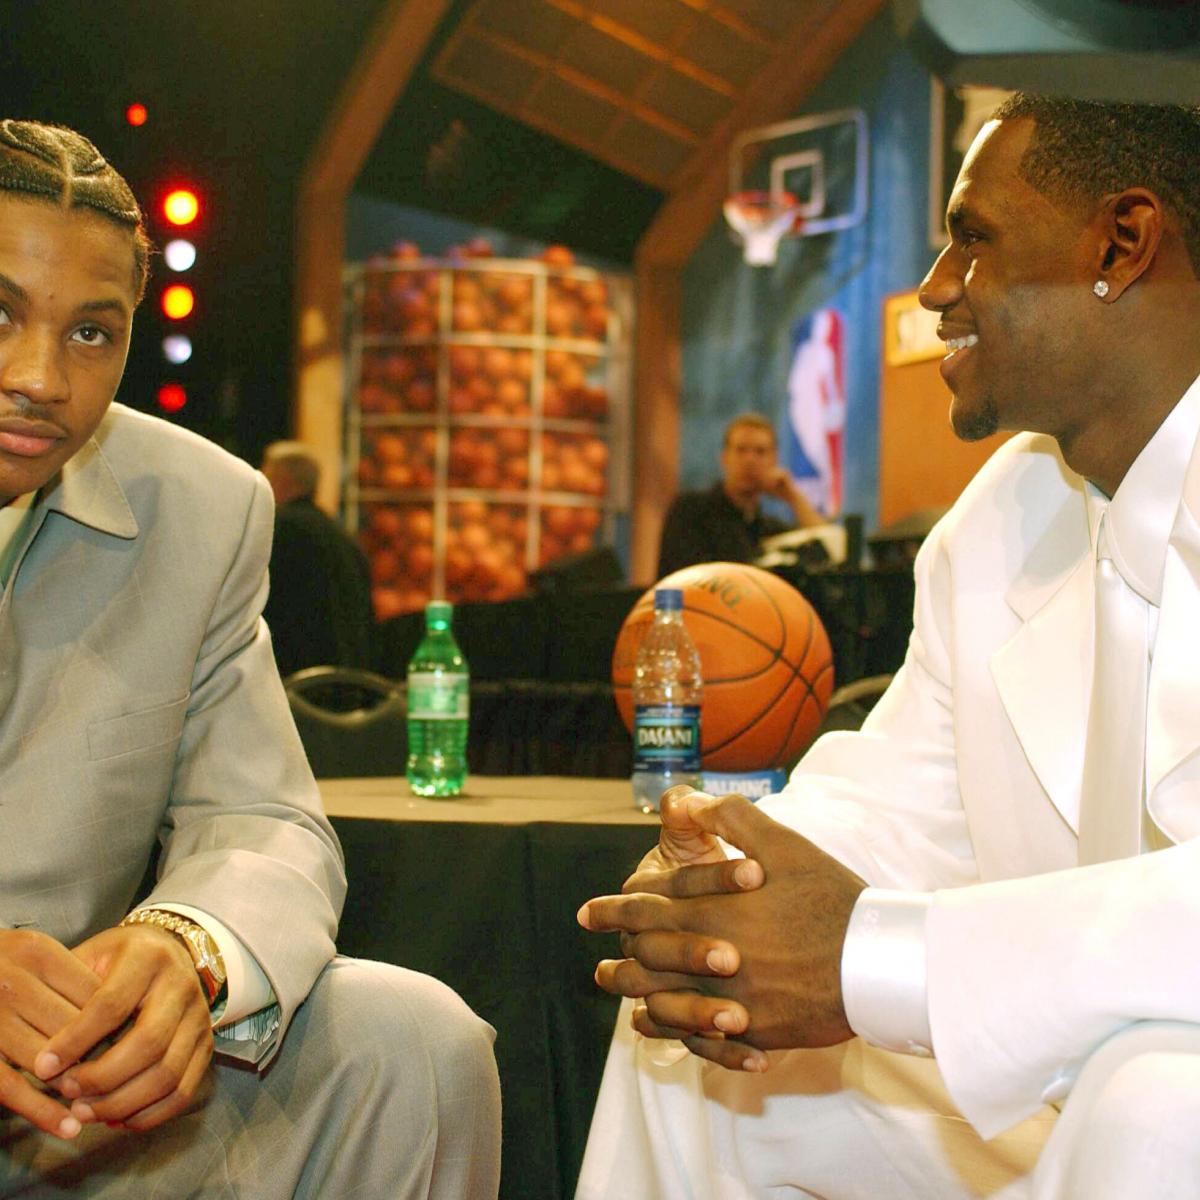 Lebron James and Carmelo Anthony  Nba fashion, Basketball clothes, Lebron  james rookie year